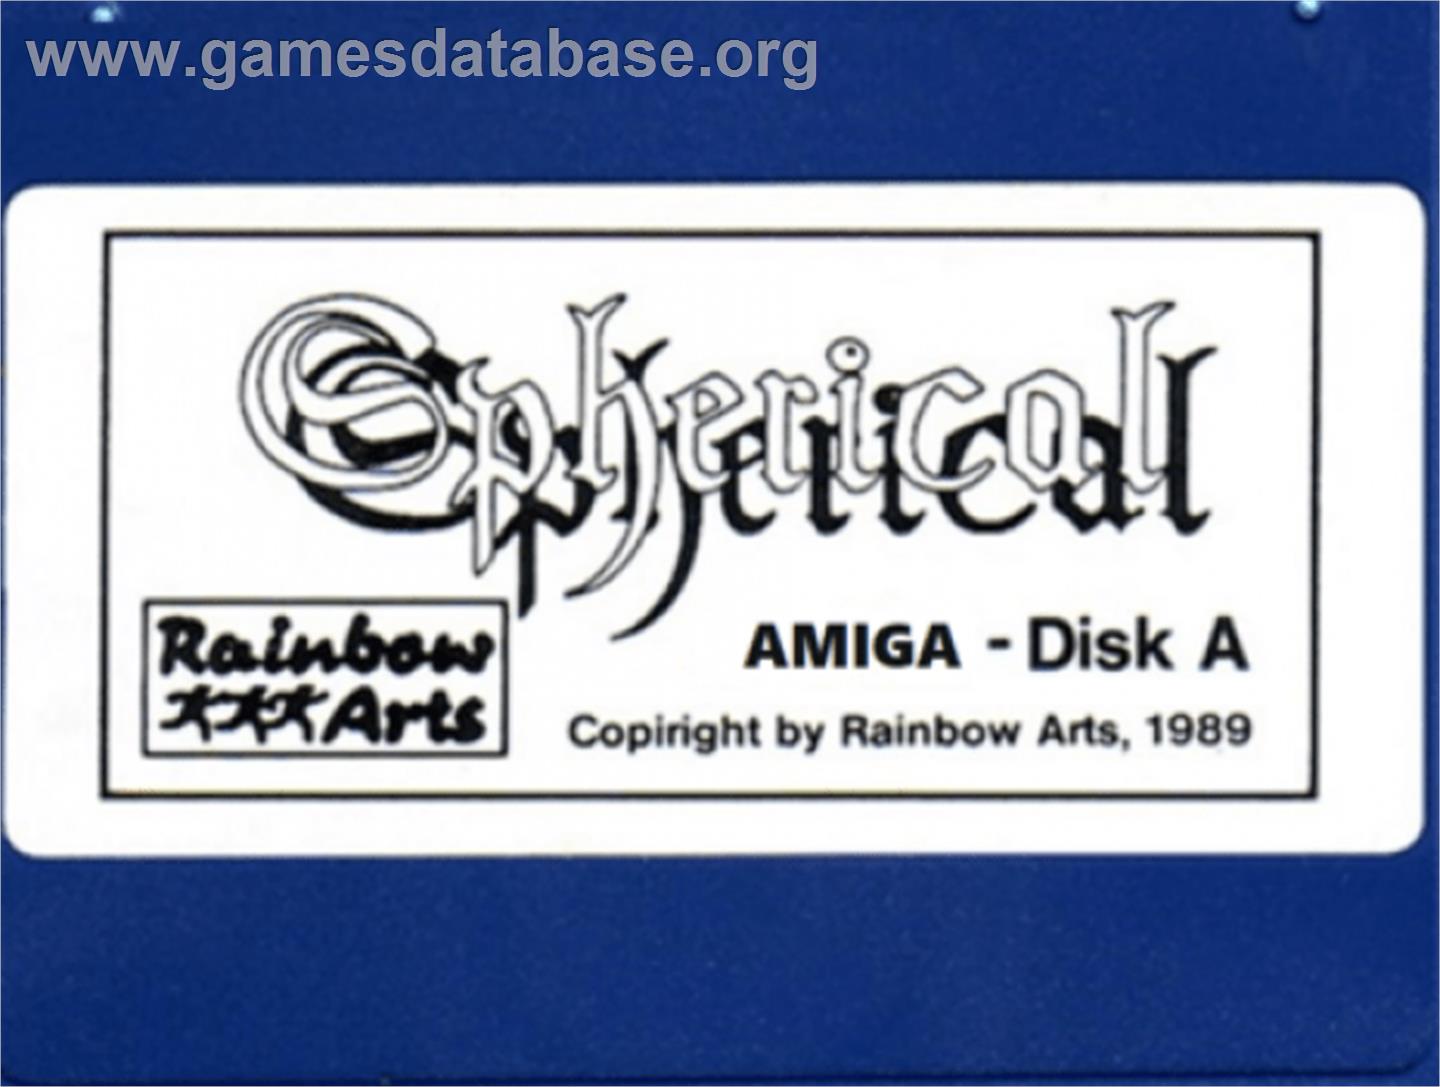 Spherical - Commodore Amiga - Artwork - Cartridge Top